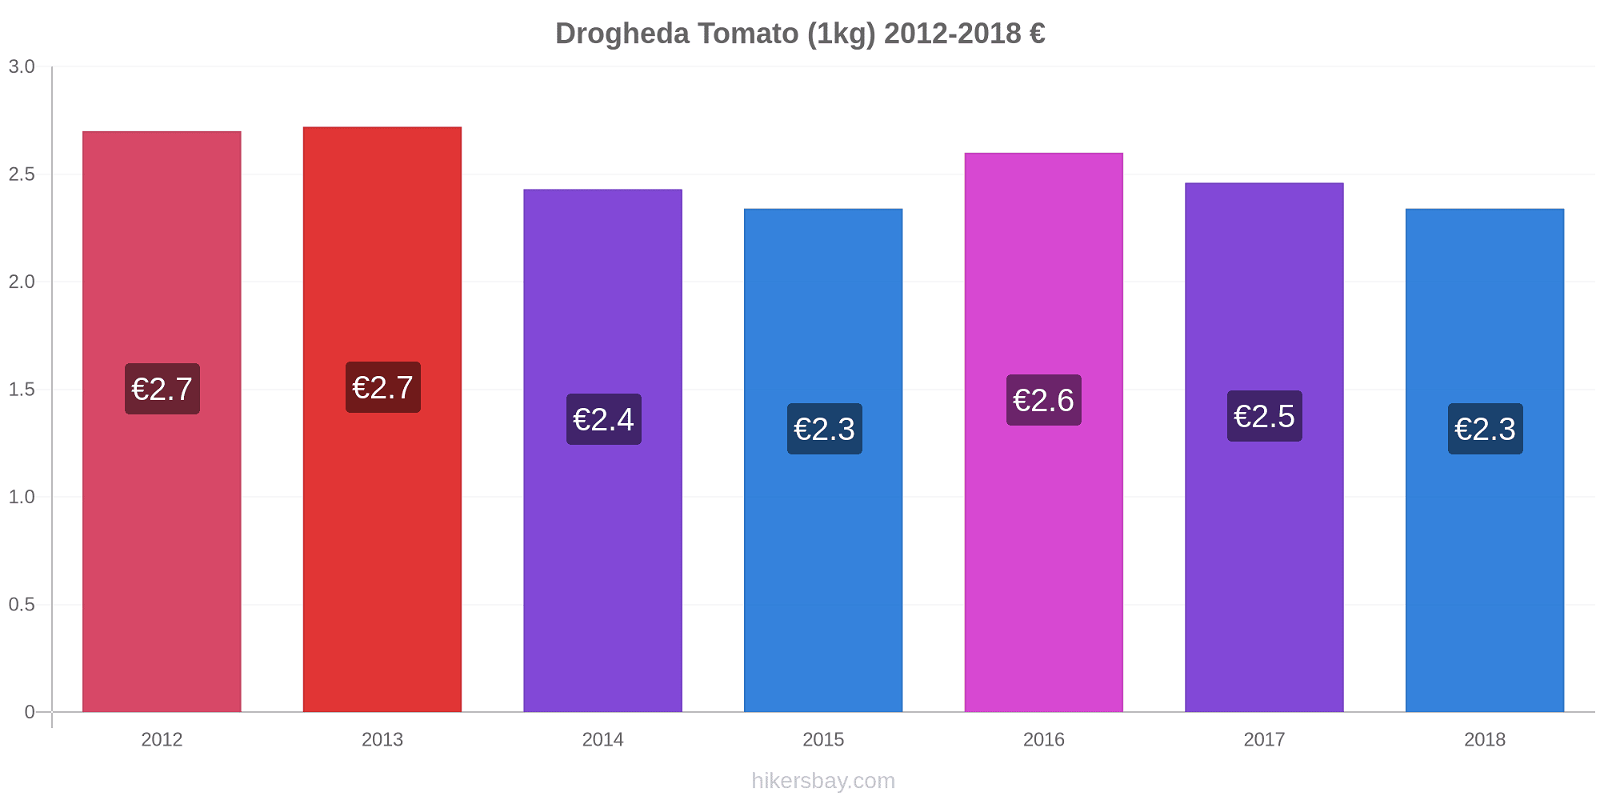 Drogheda price changes Tomato (1kg) hikersbay.com